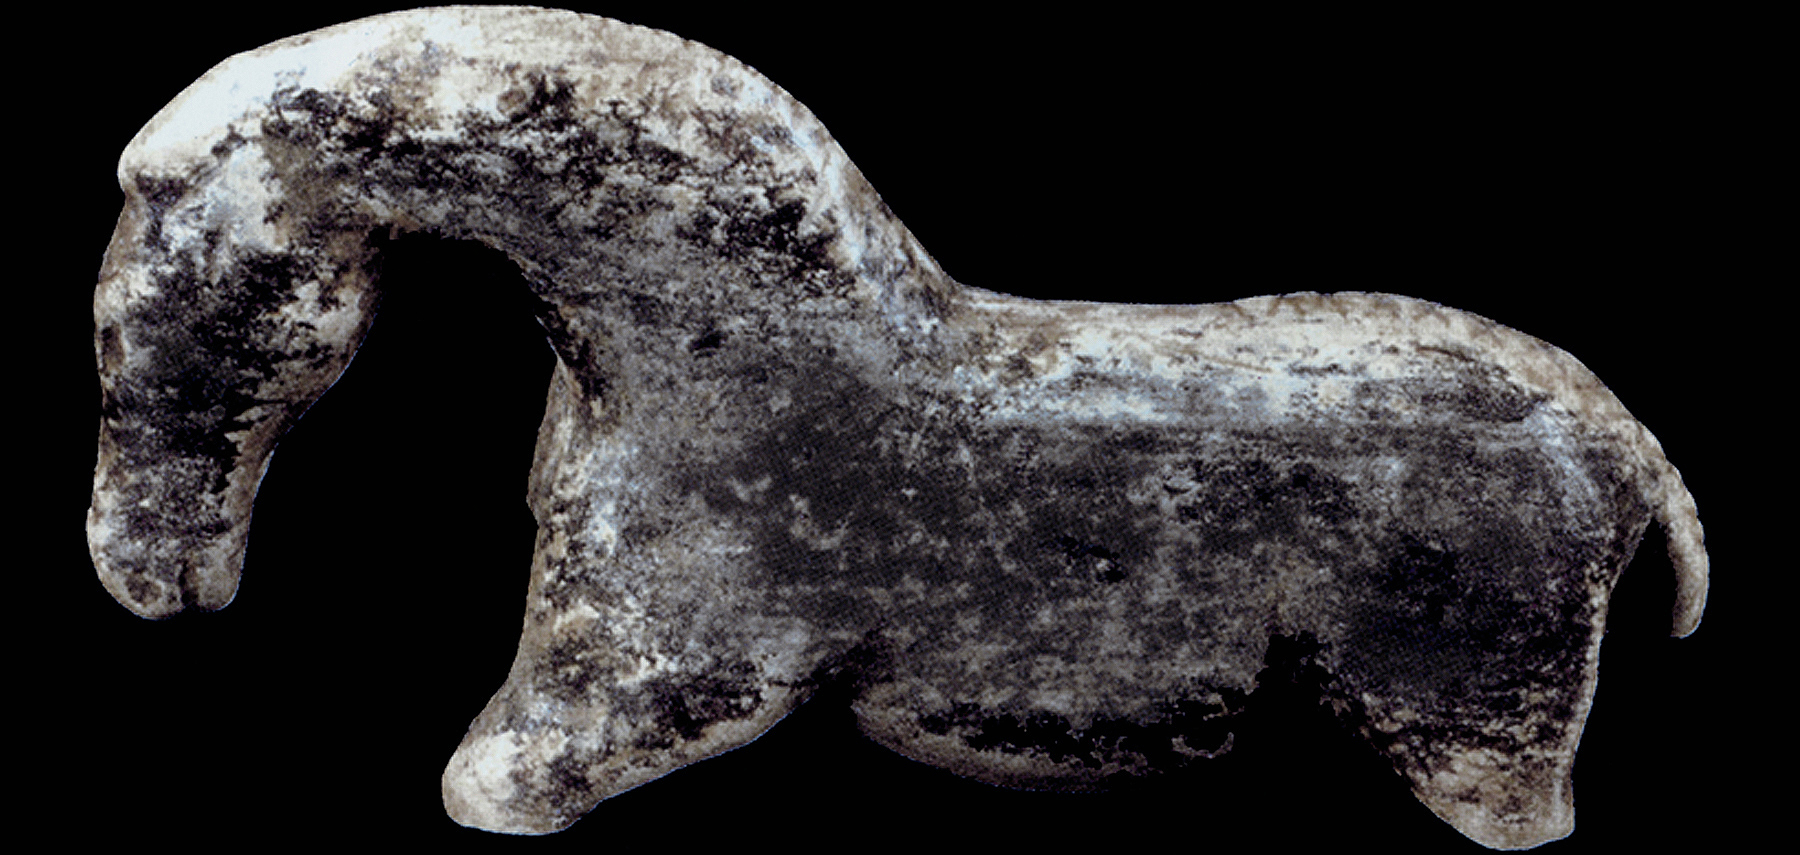 Vogelherd Horse Cave Ice Age Sculpture Prehistory History Art Sculptures Archaeology Germany Aurignacian